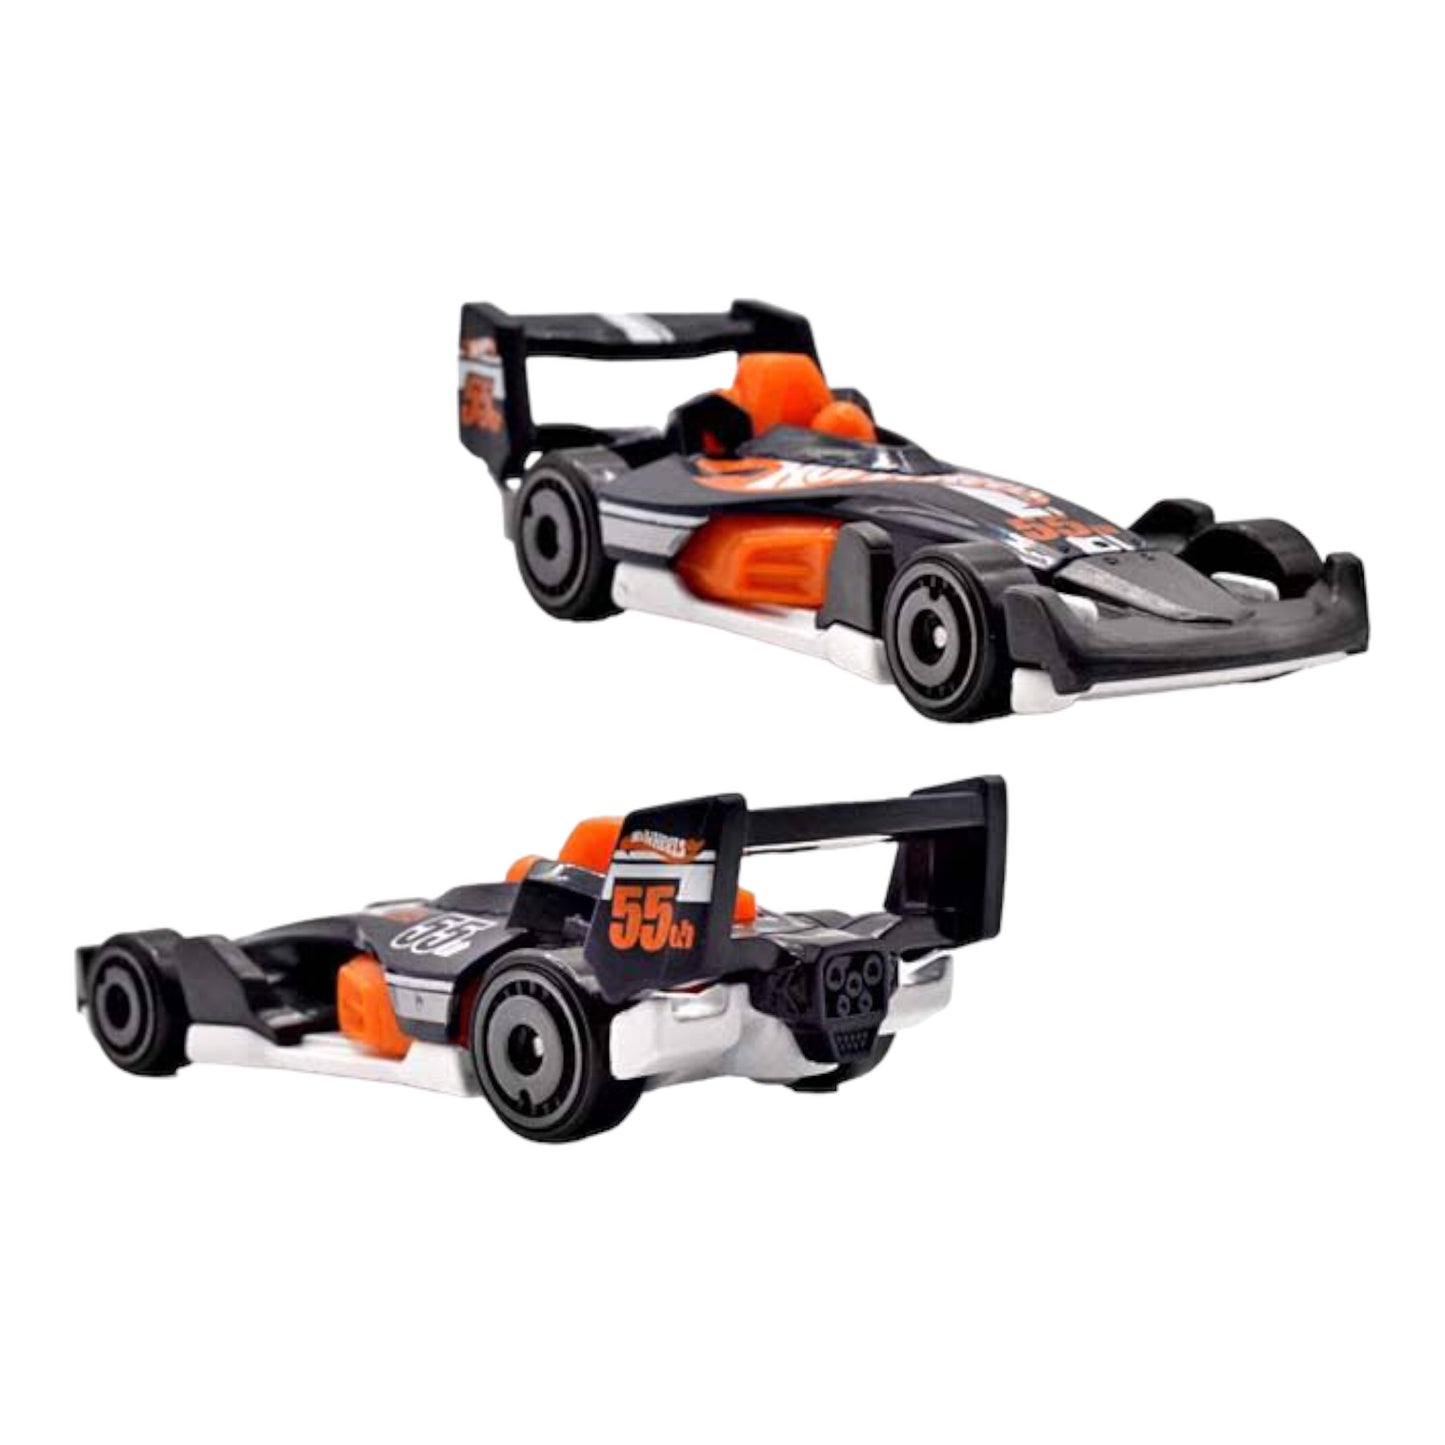 Hot Wheels HW 55 RACE TEAM Mattel